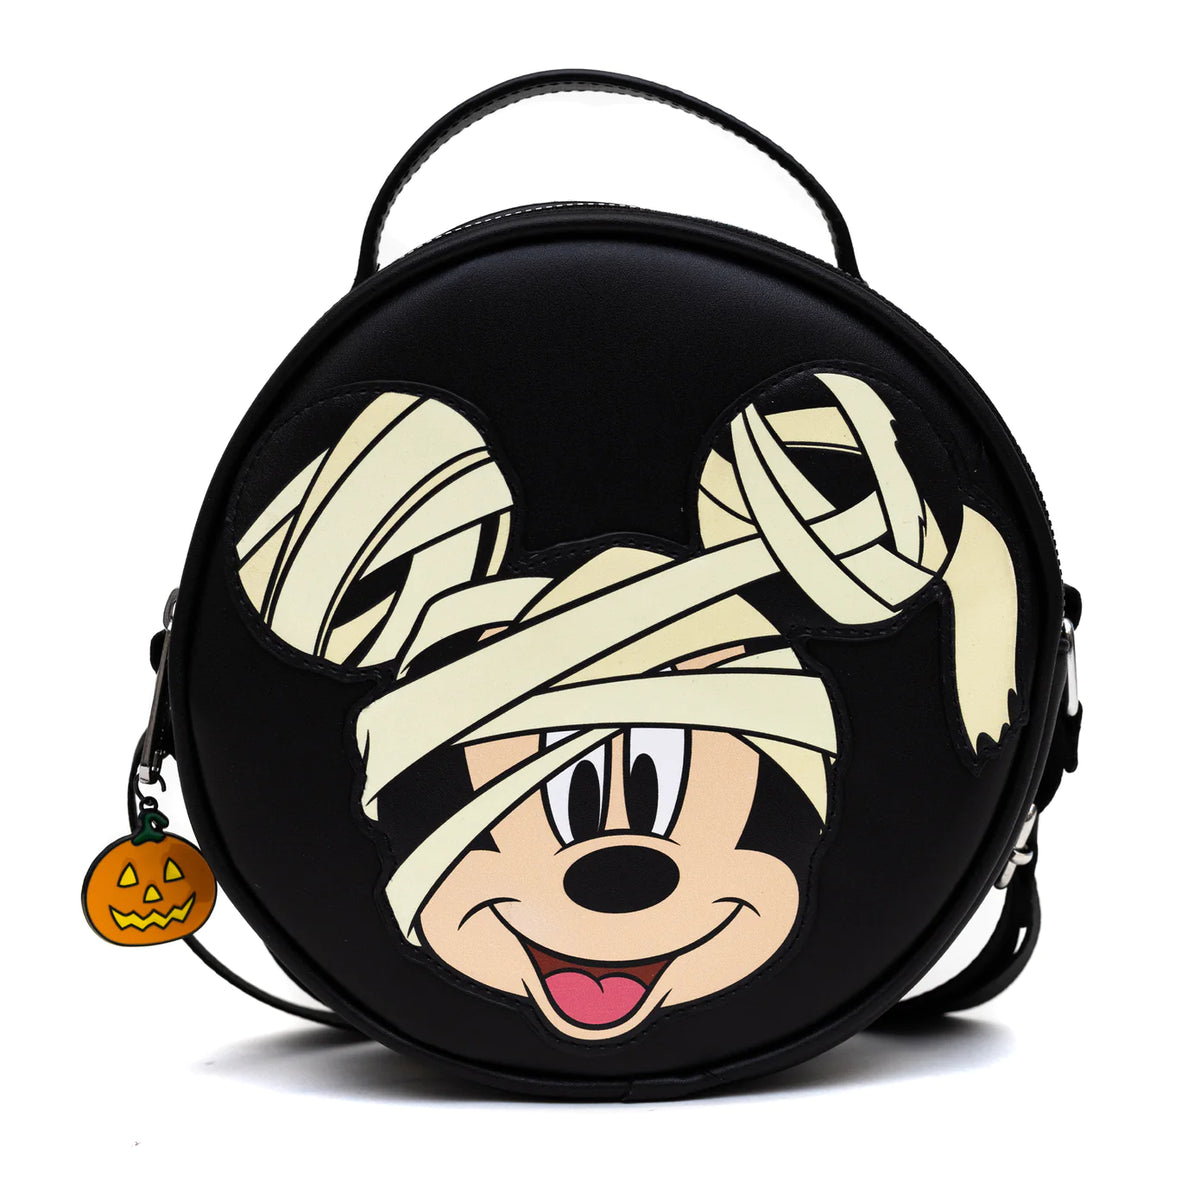 Disney Bag, Cross Body, Round, Mummy Mickey Mouse Glow in the Dark Smiling Applique, Black, Vegan Leather